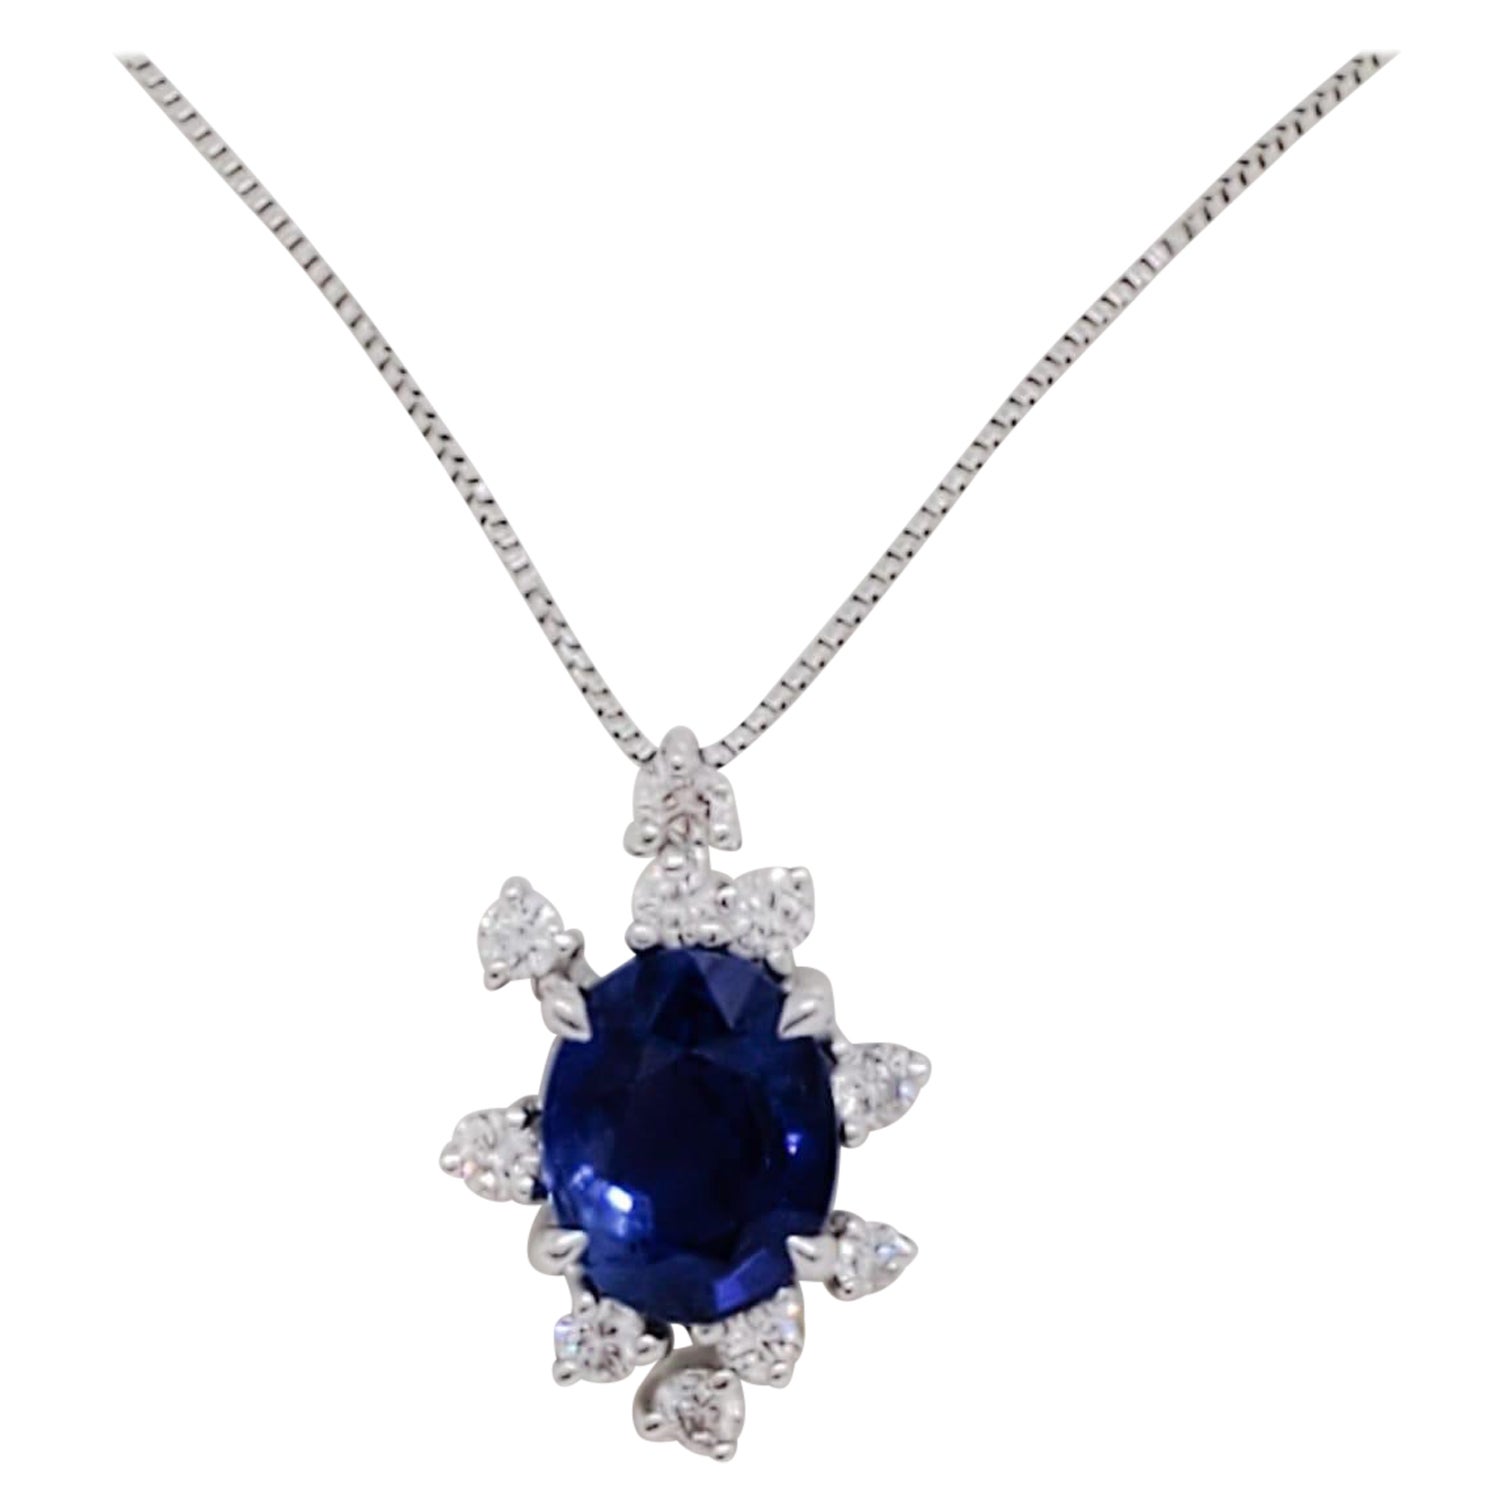 AIGS Unheated Sri Lanka Blue Sapphire and Diamond Pendant Necklace